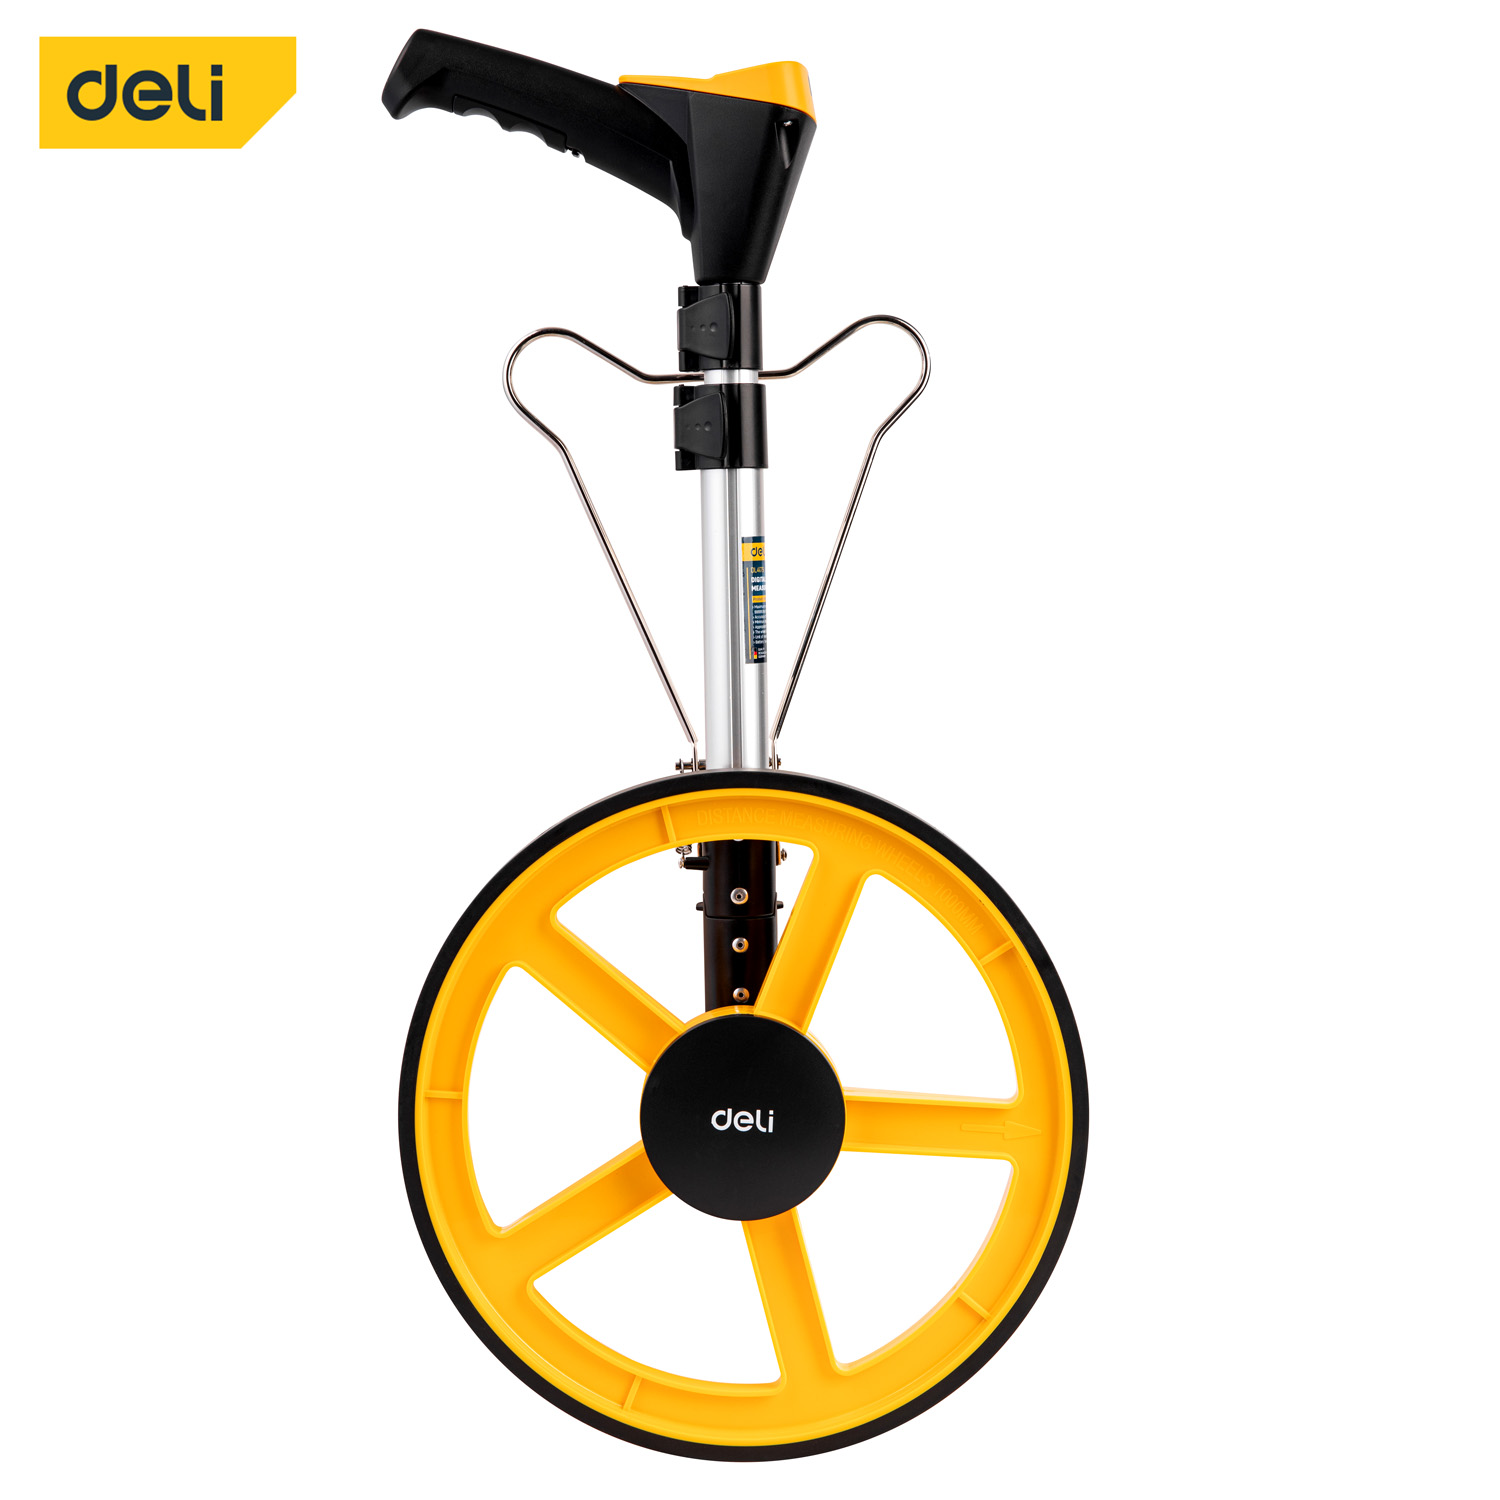 Deli-EDL4179 Digital Distance Measuring Wheels